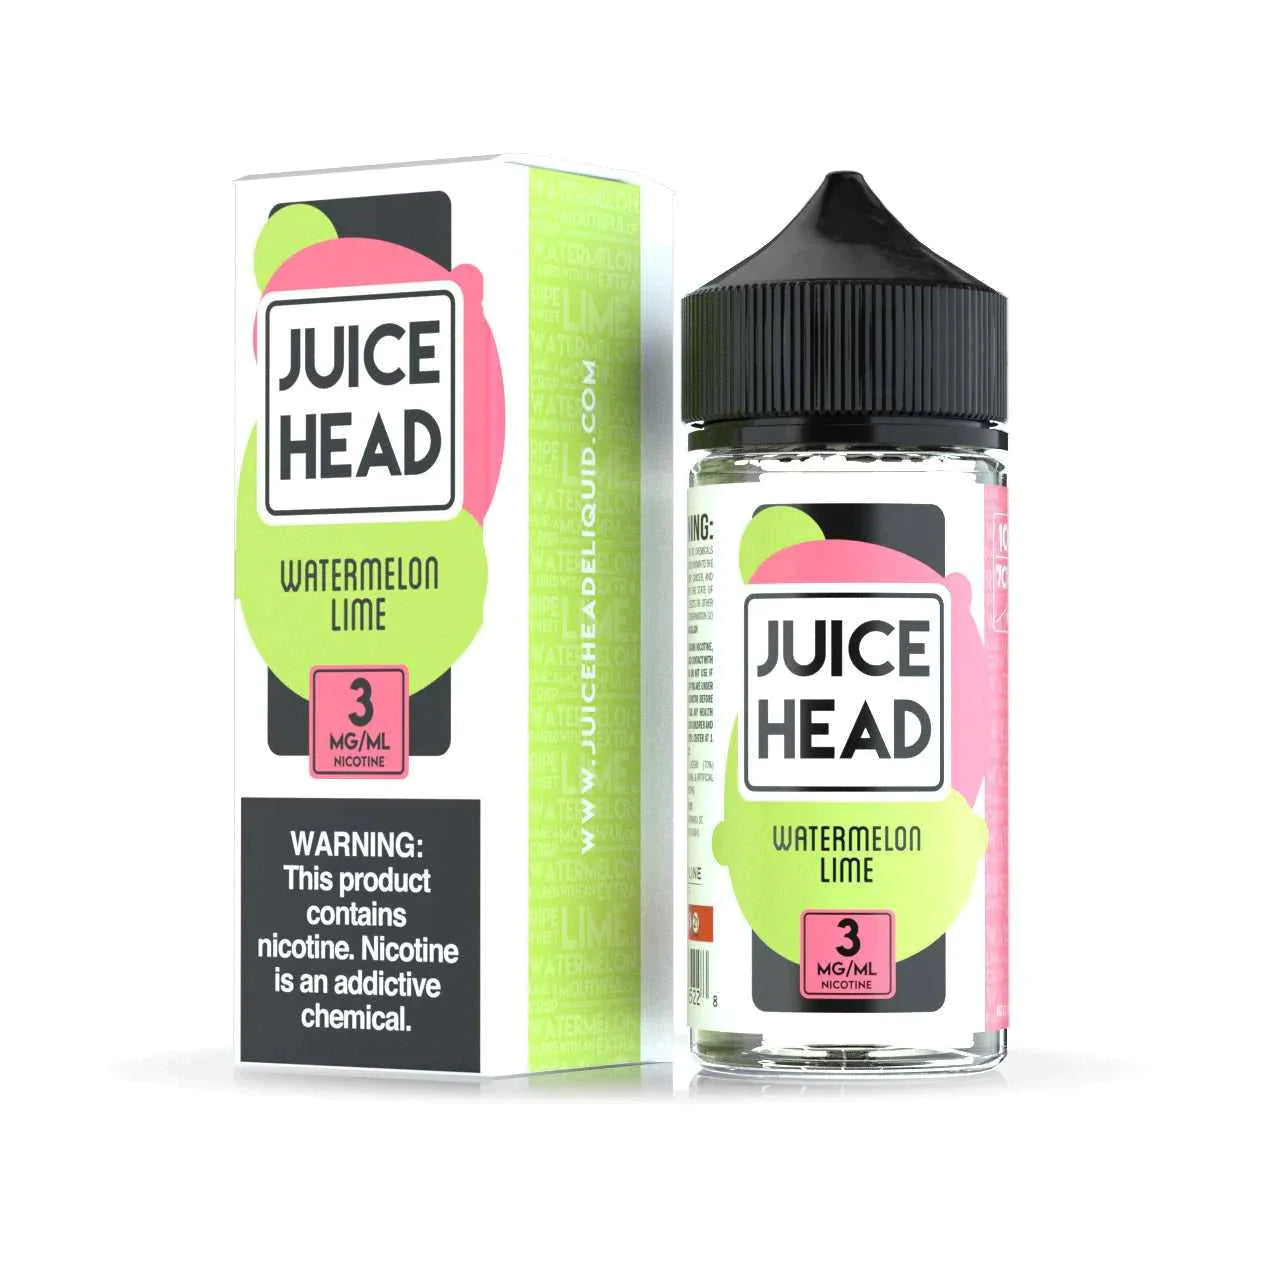 JUICE HEAD E-LIQUID WATERMELON LIME - 30ML(FREEBASE) - E-Juice Steals